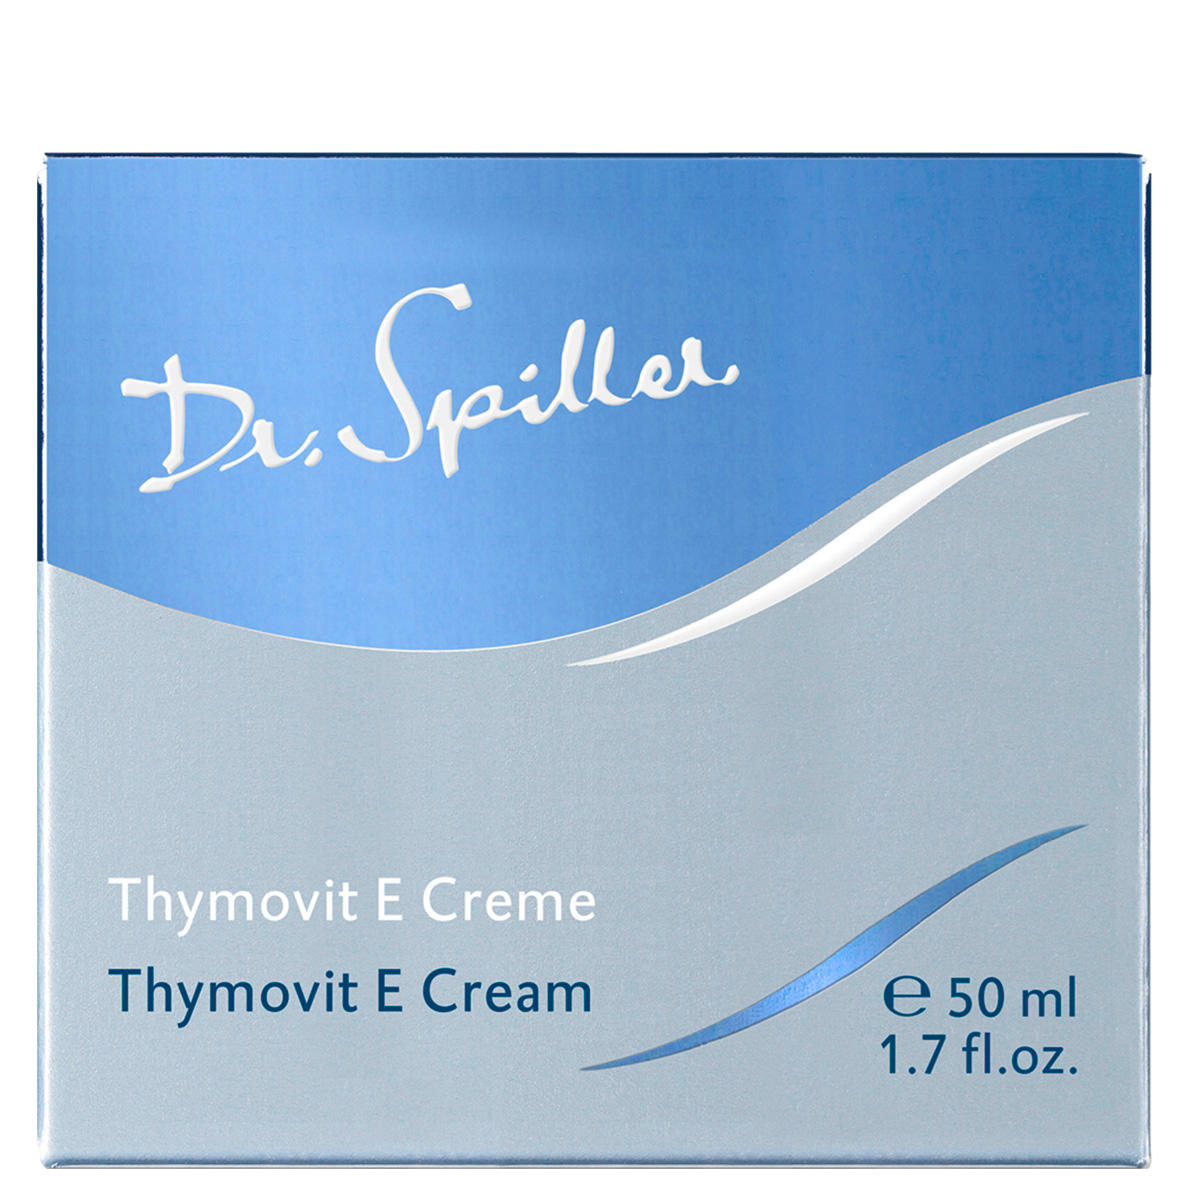 Dr. Spiller Biomimetic SkinCare Thymovit E Creme 50 ml - 3